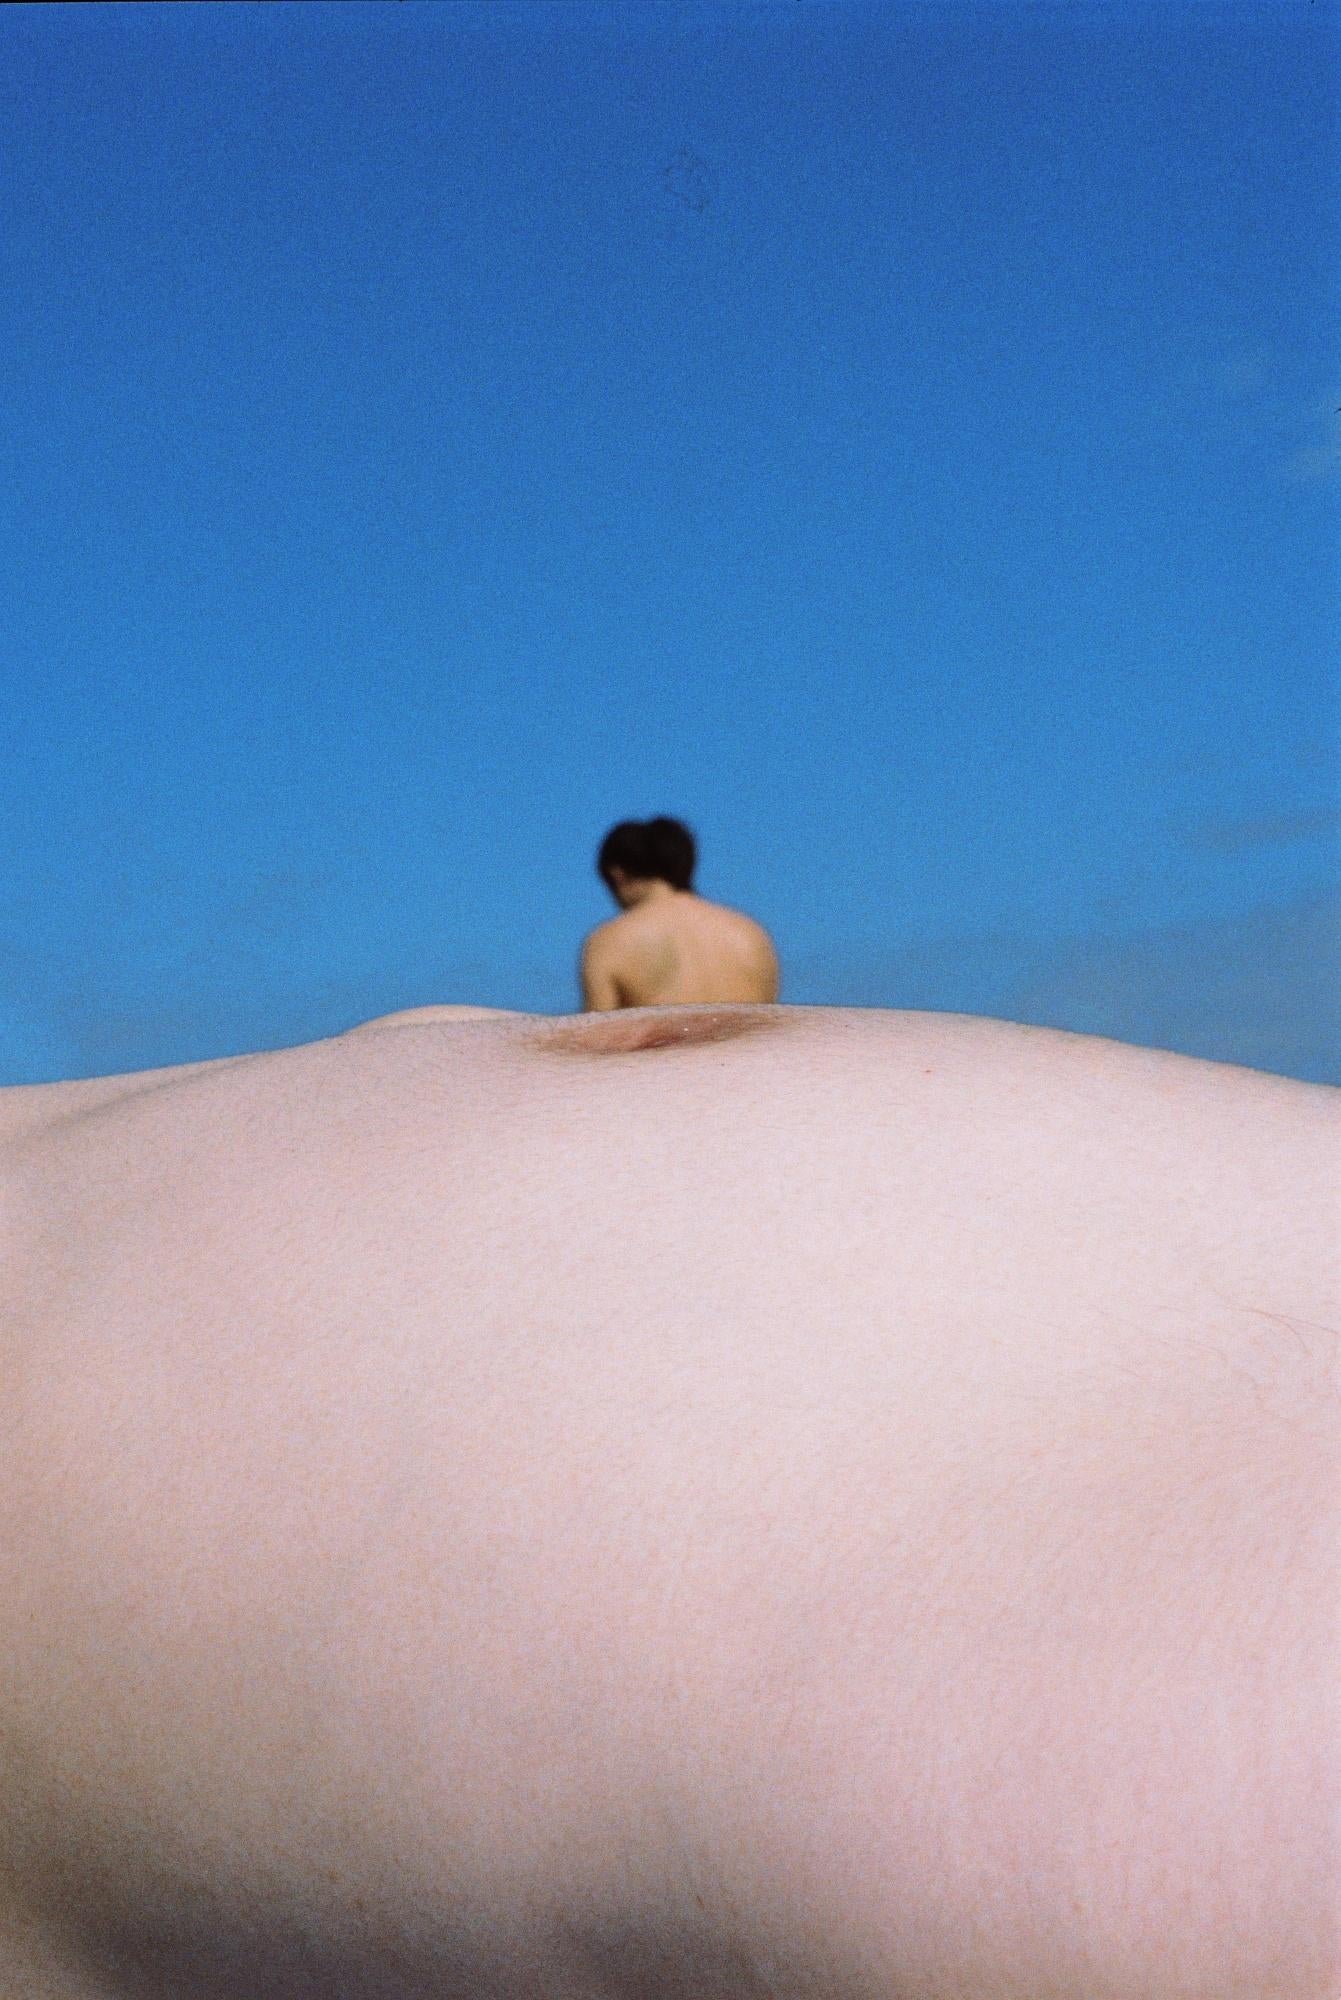 People on the beach 7 – John Yuyi, Nude, Human Figure, Photography, Abstract